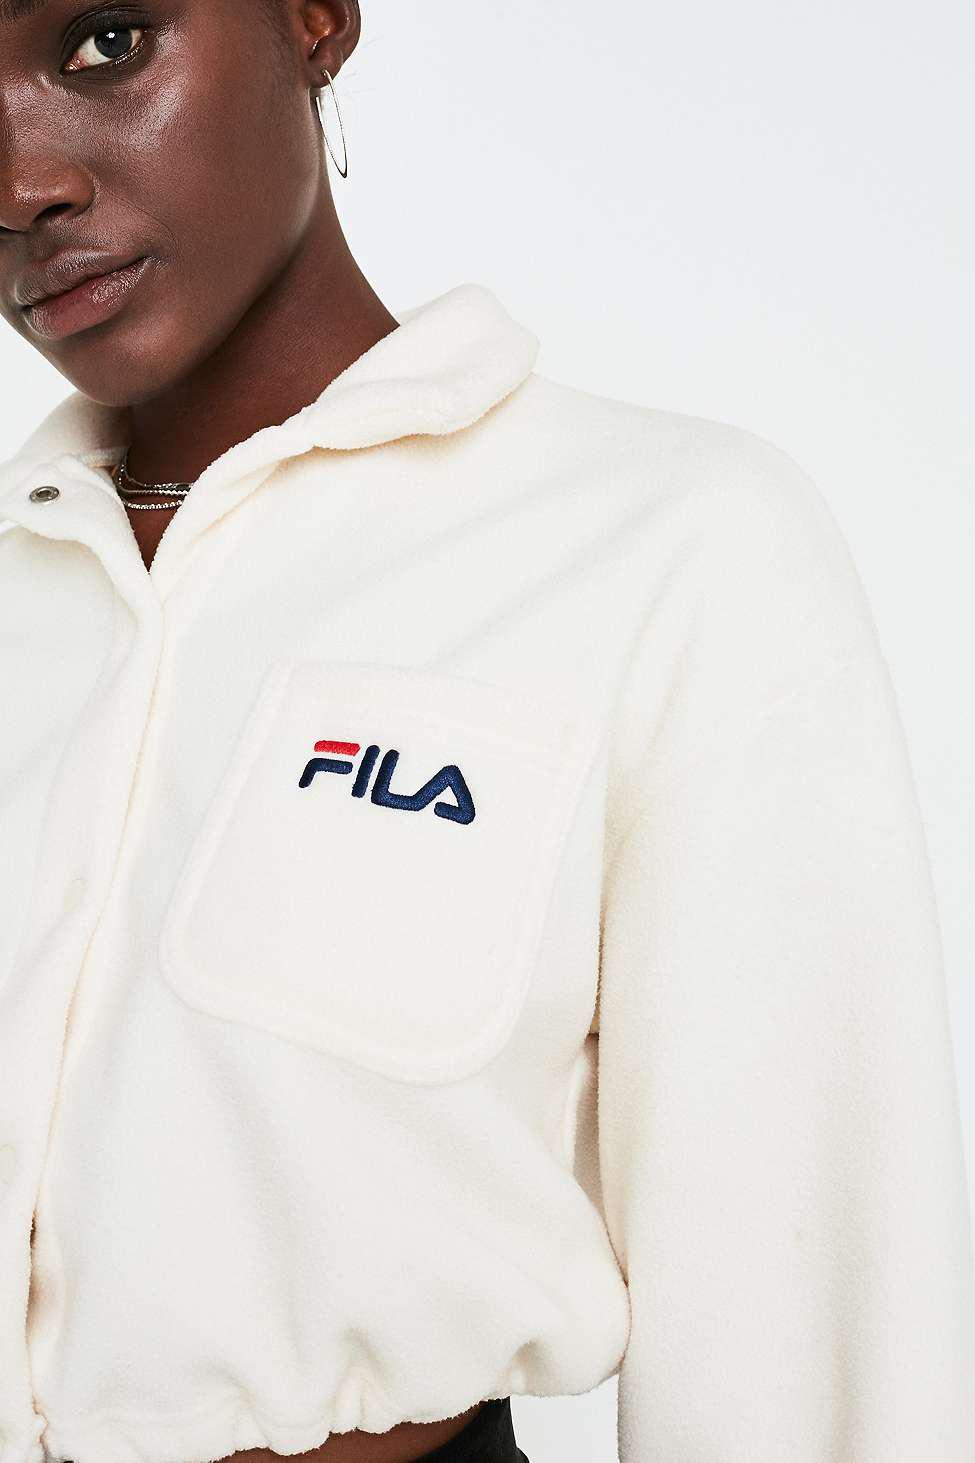 Fila Fleece Shirt Hotsell, SAVE 55% - fearthemecca.com